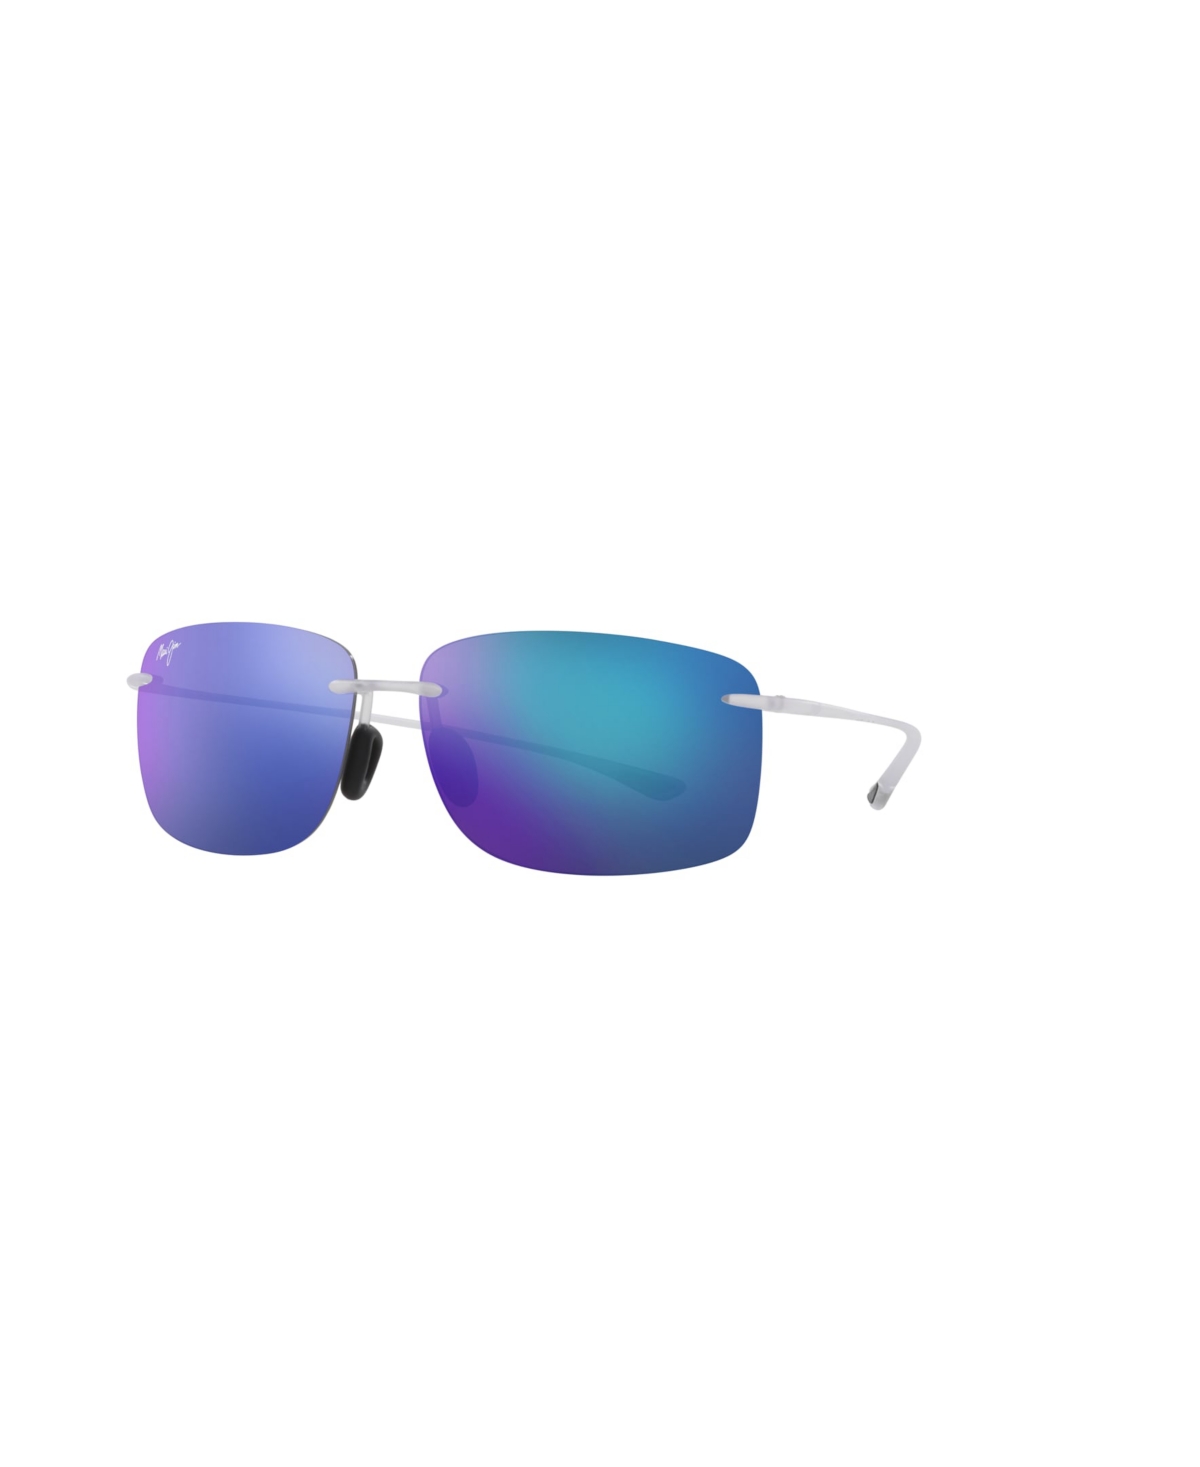 Unisex Sunglasses, B443-05Cm Mj000643 - Crystal Matte